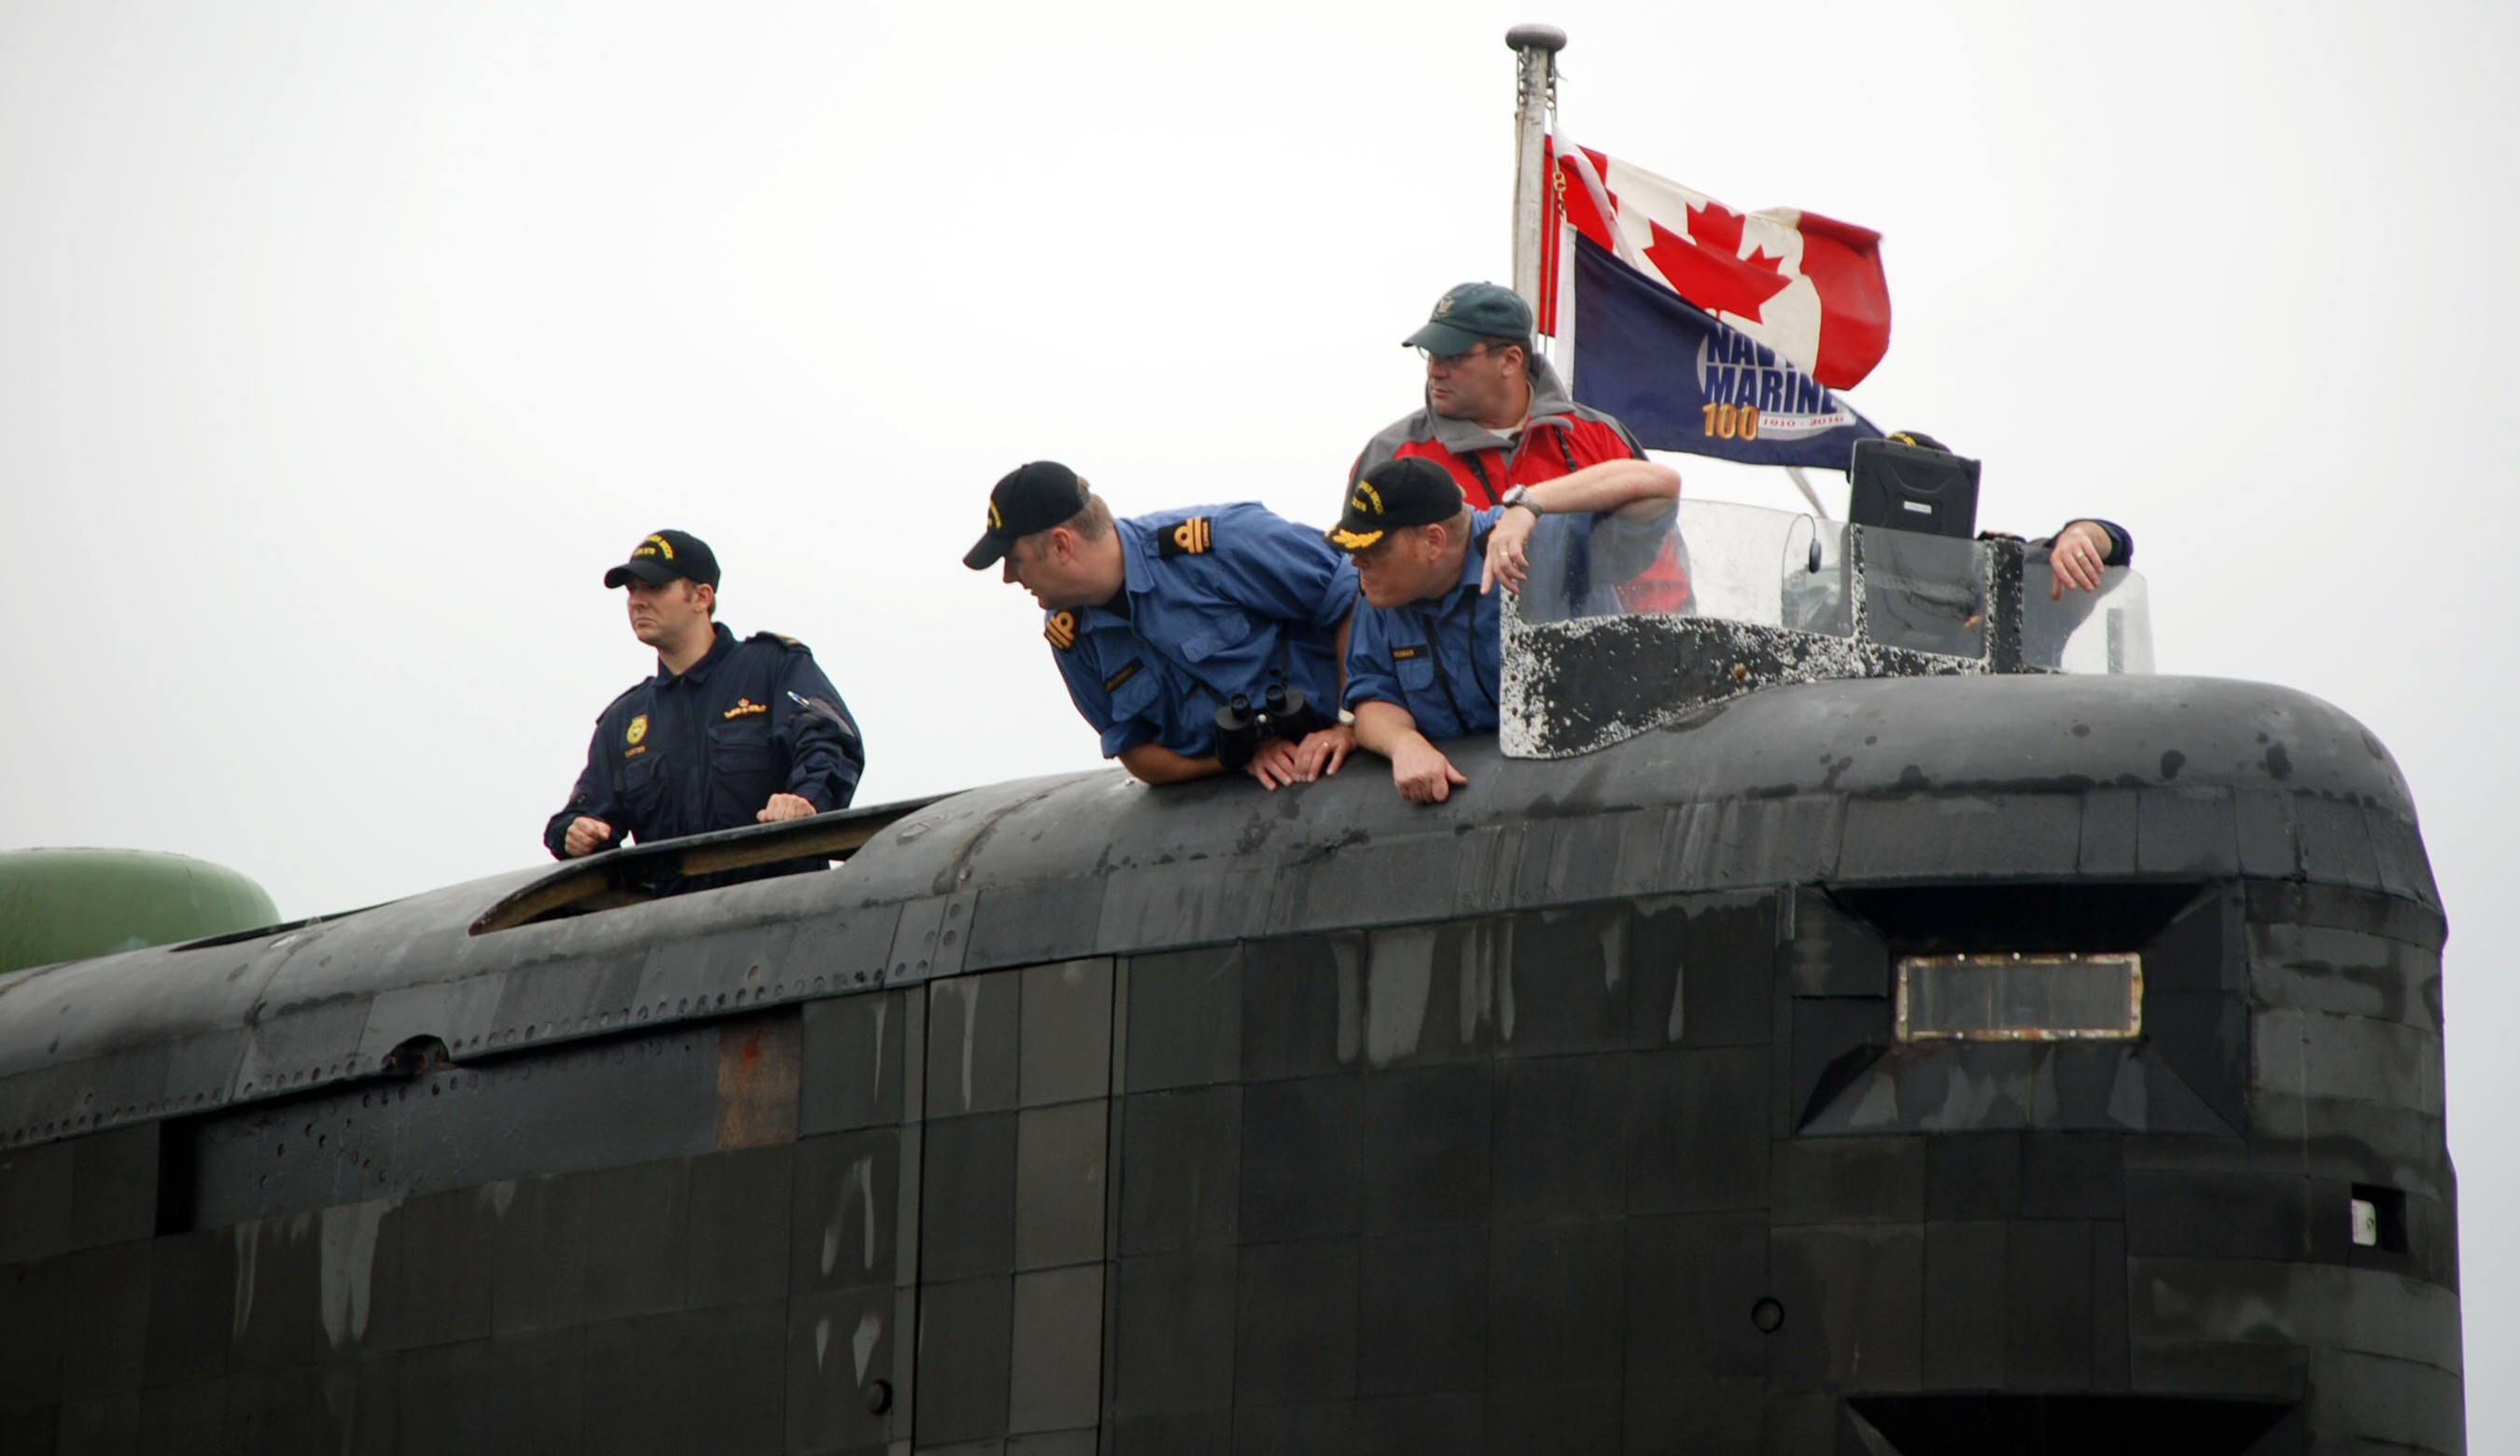 ssk-878 hmcs corner brook victoria upholder class patrol submarine ncsm royal canadian navy 04